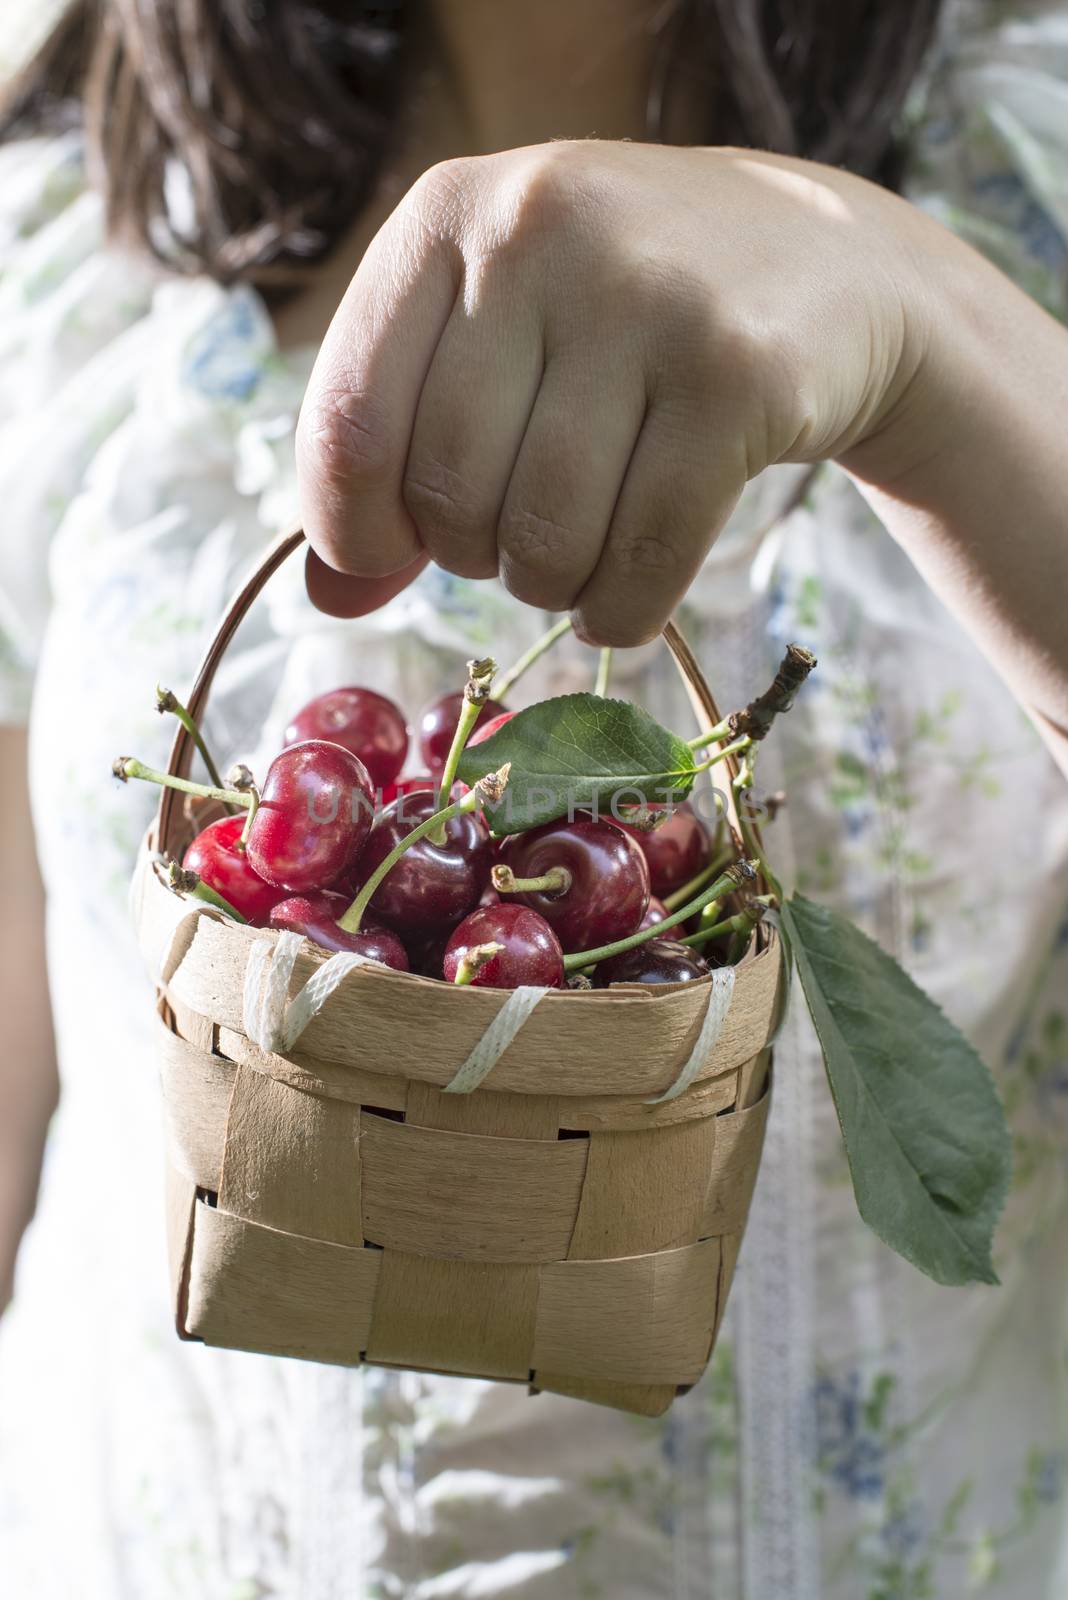 Woman picking cherries in the garden by deyan_georgiev